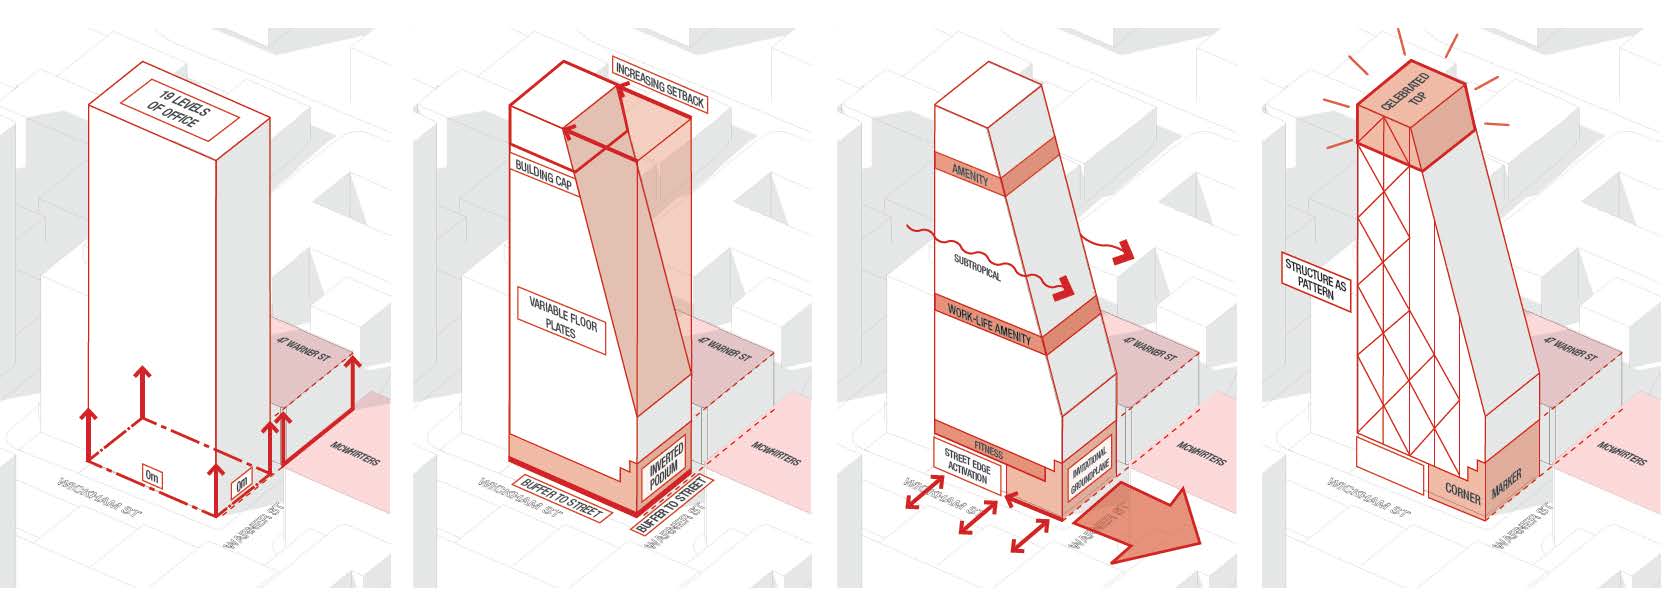 Architectual diagram of vertical form